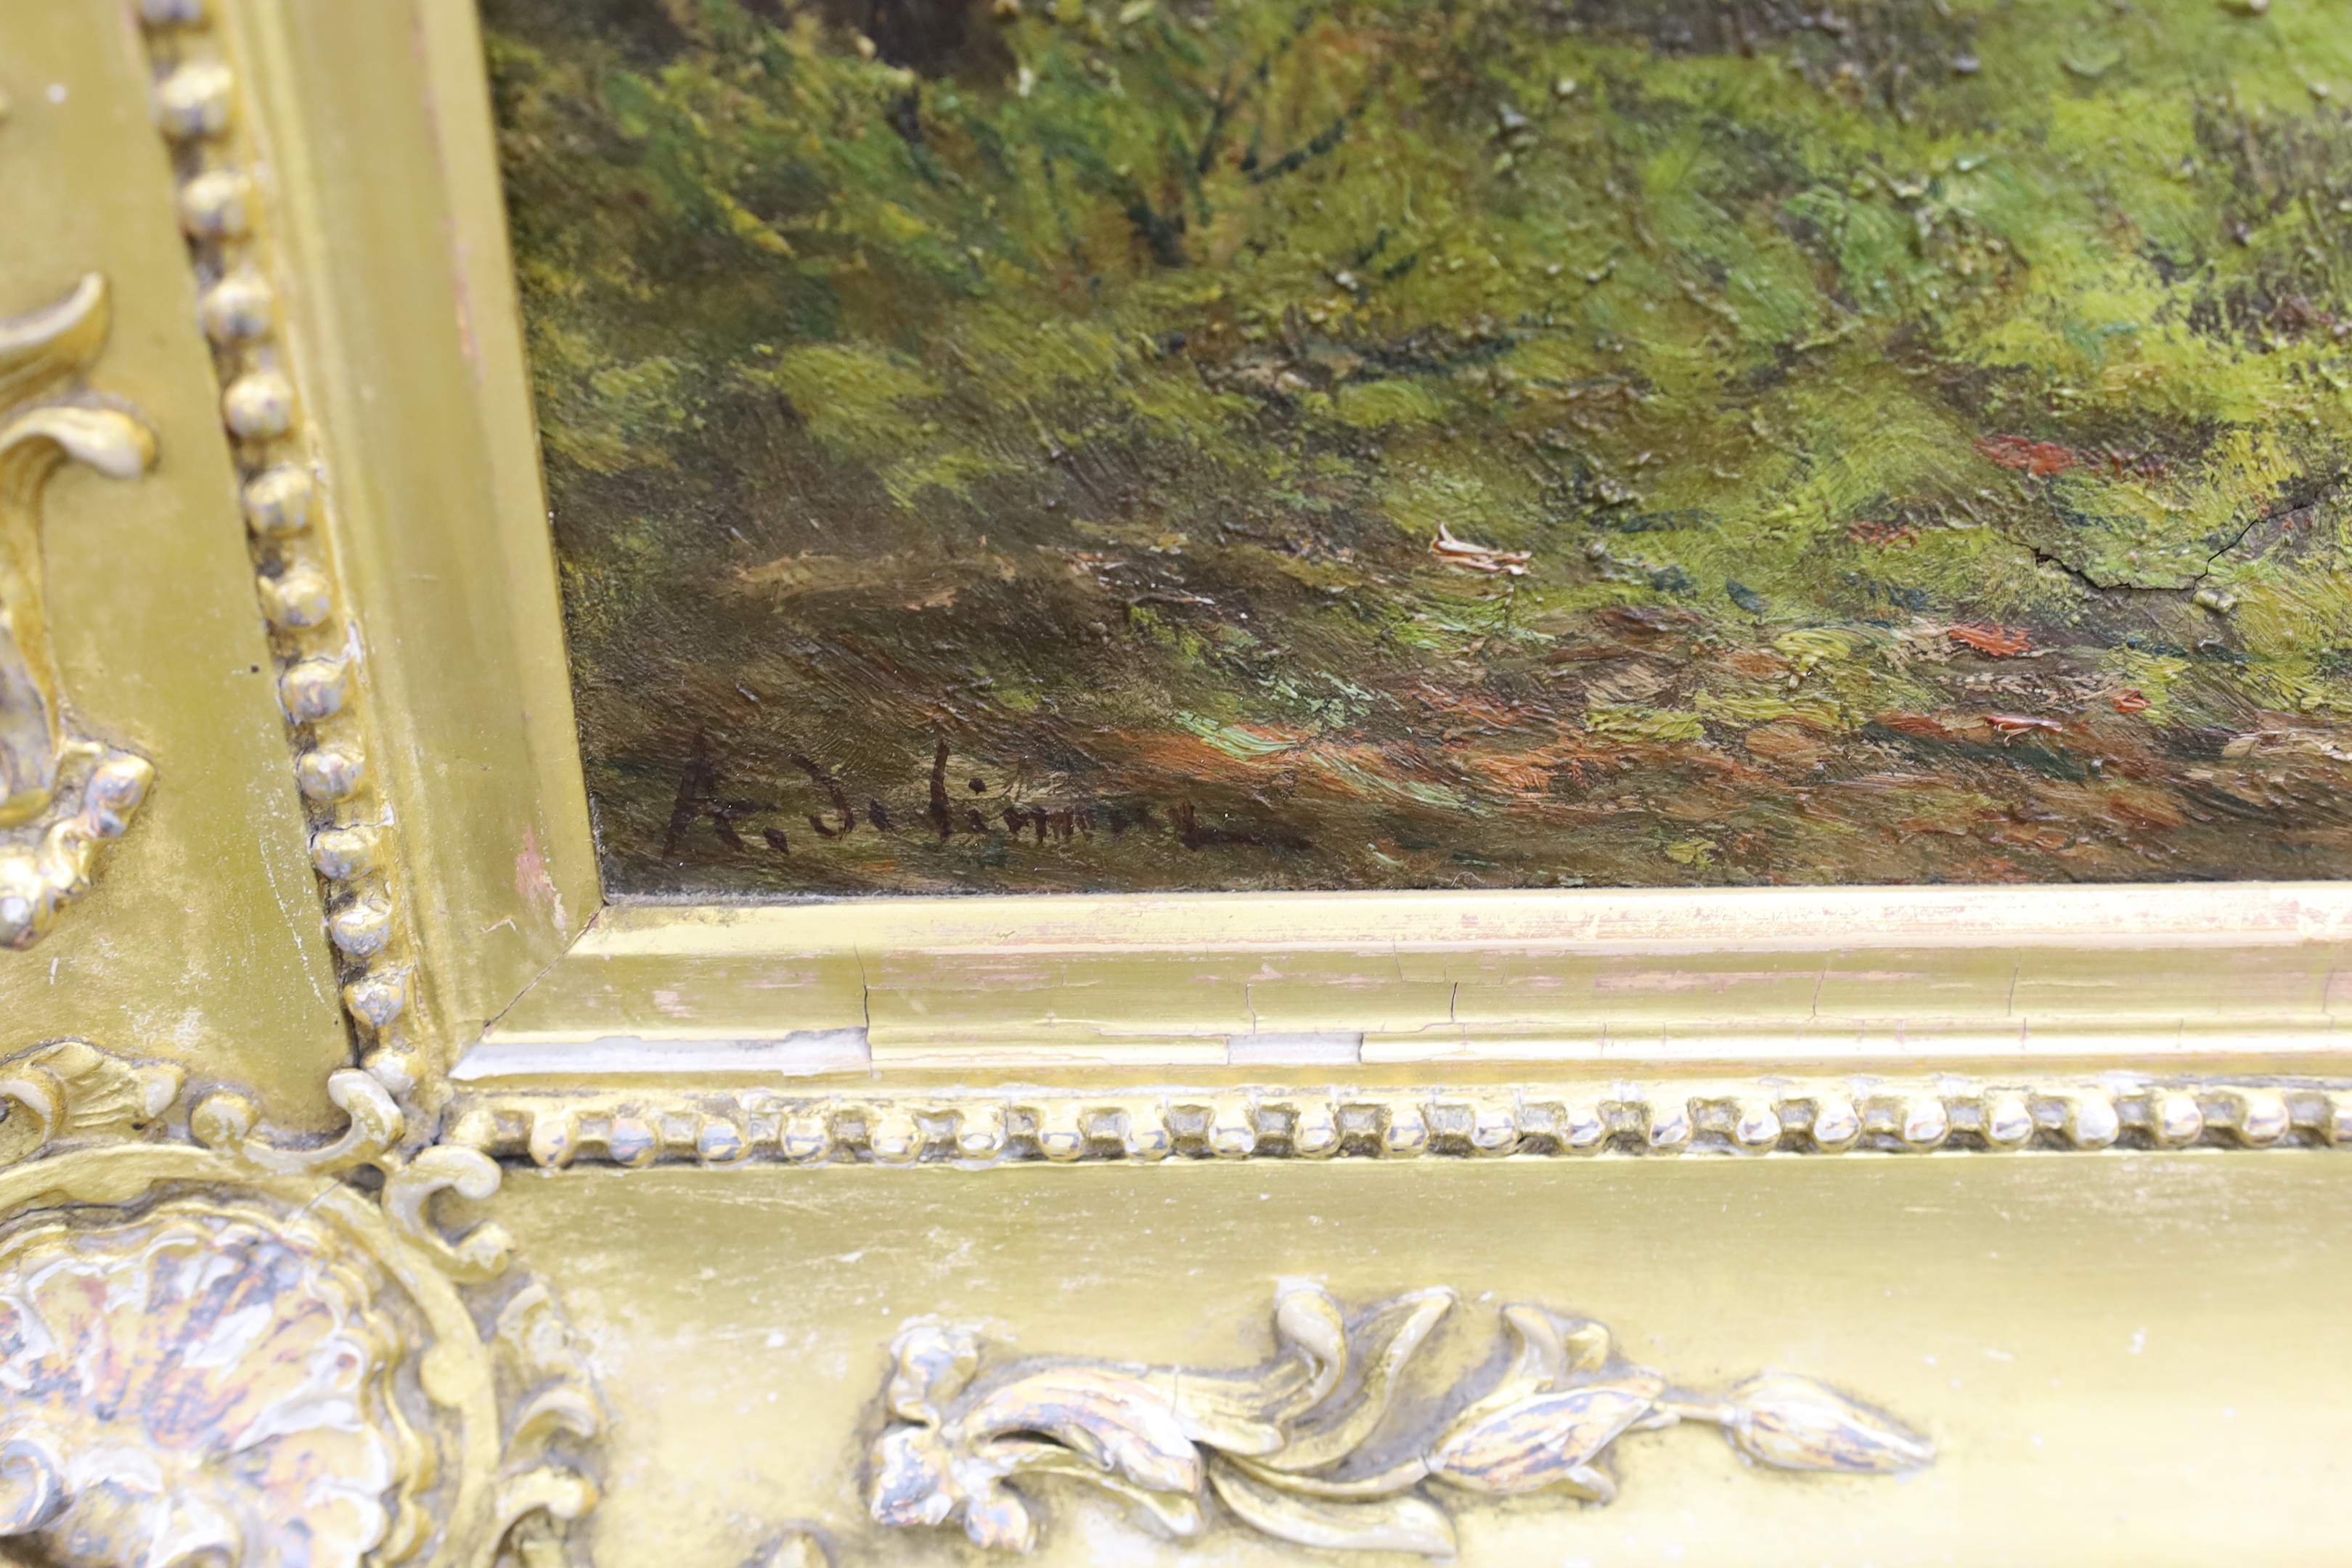 Di Simone, pair of oils on canvas, River landscapes, each signed, 67 x 48cm, ornate gilt frames